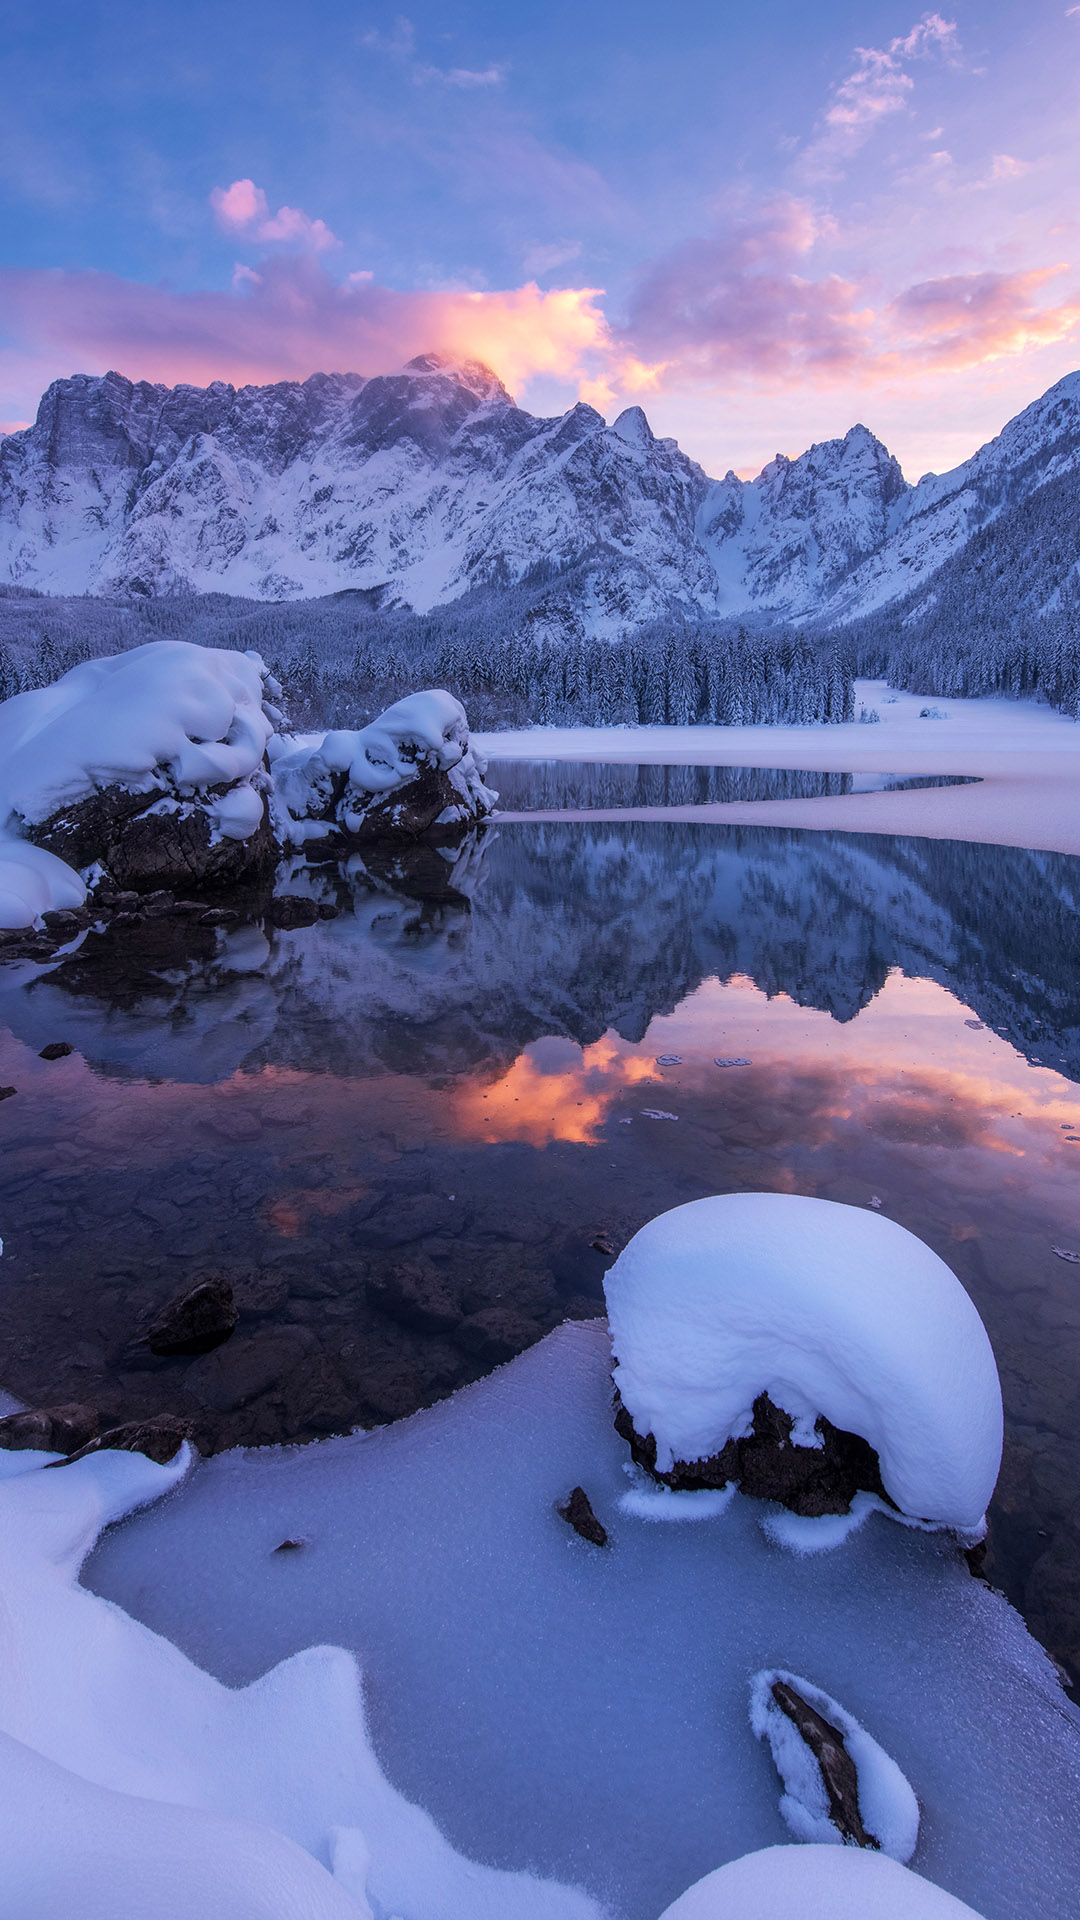 Dreamy Pixel. Free iPhone Wallpaper: Winter reflection